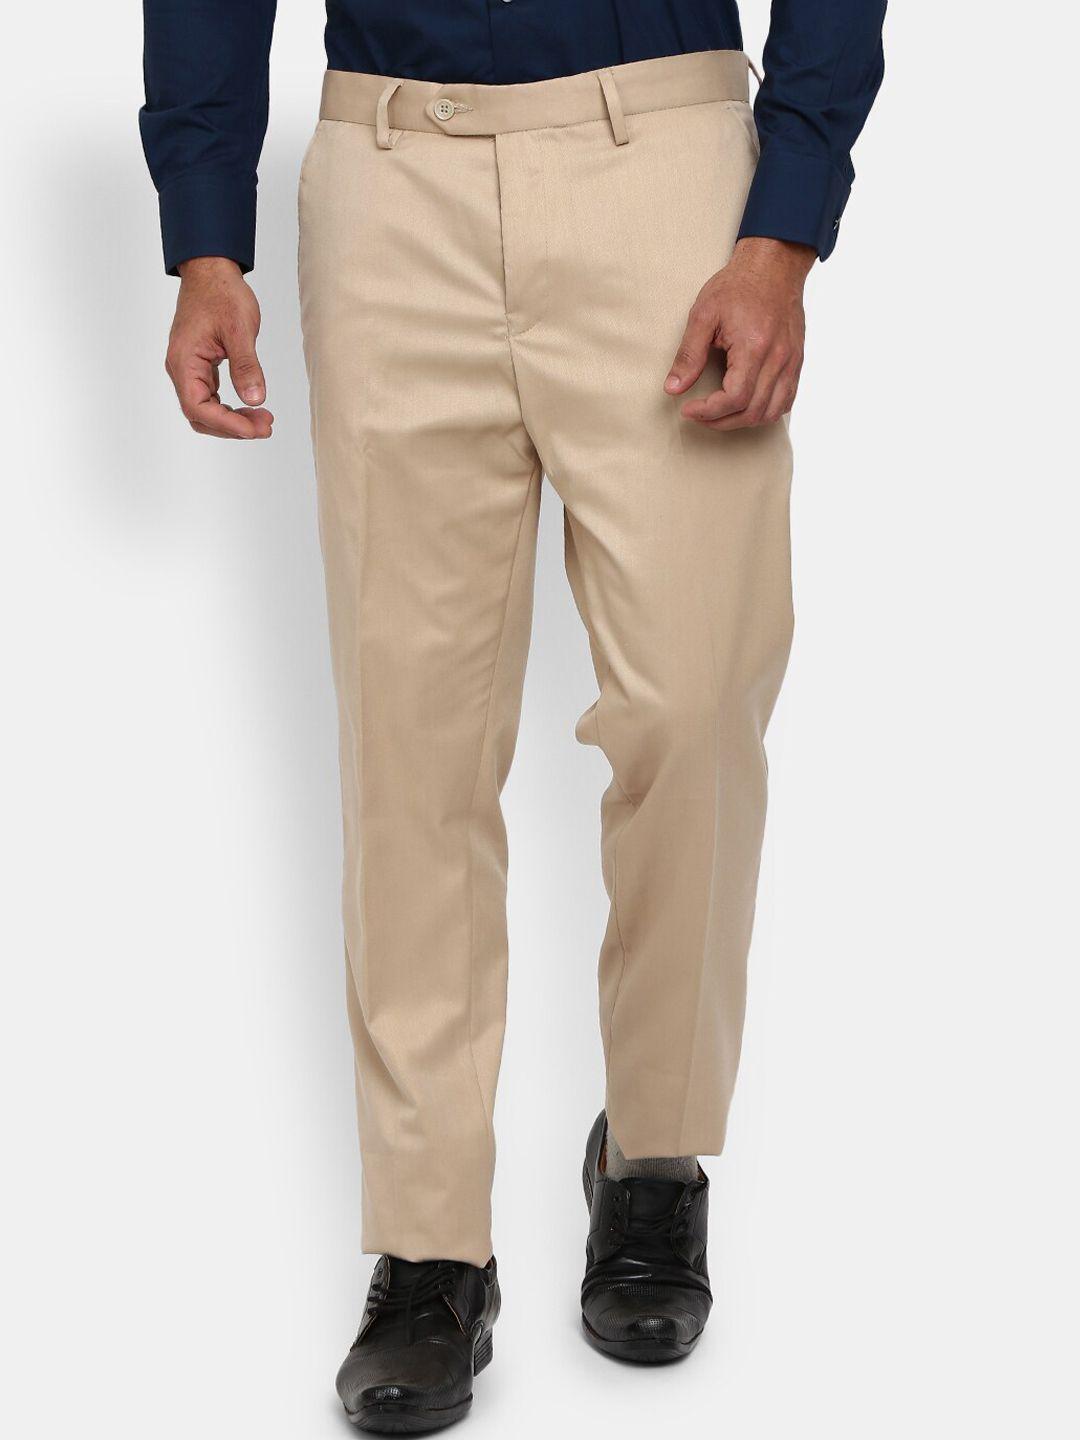 v-mart men beige slim fit chinos formal trousers